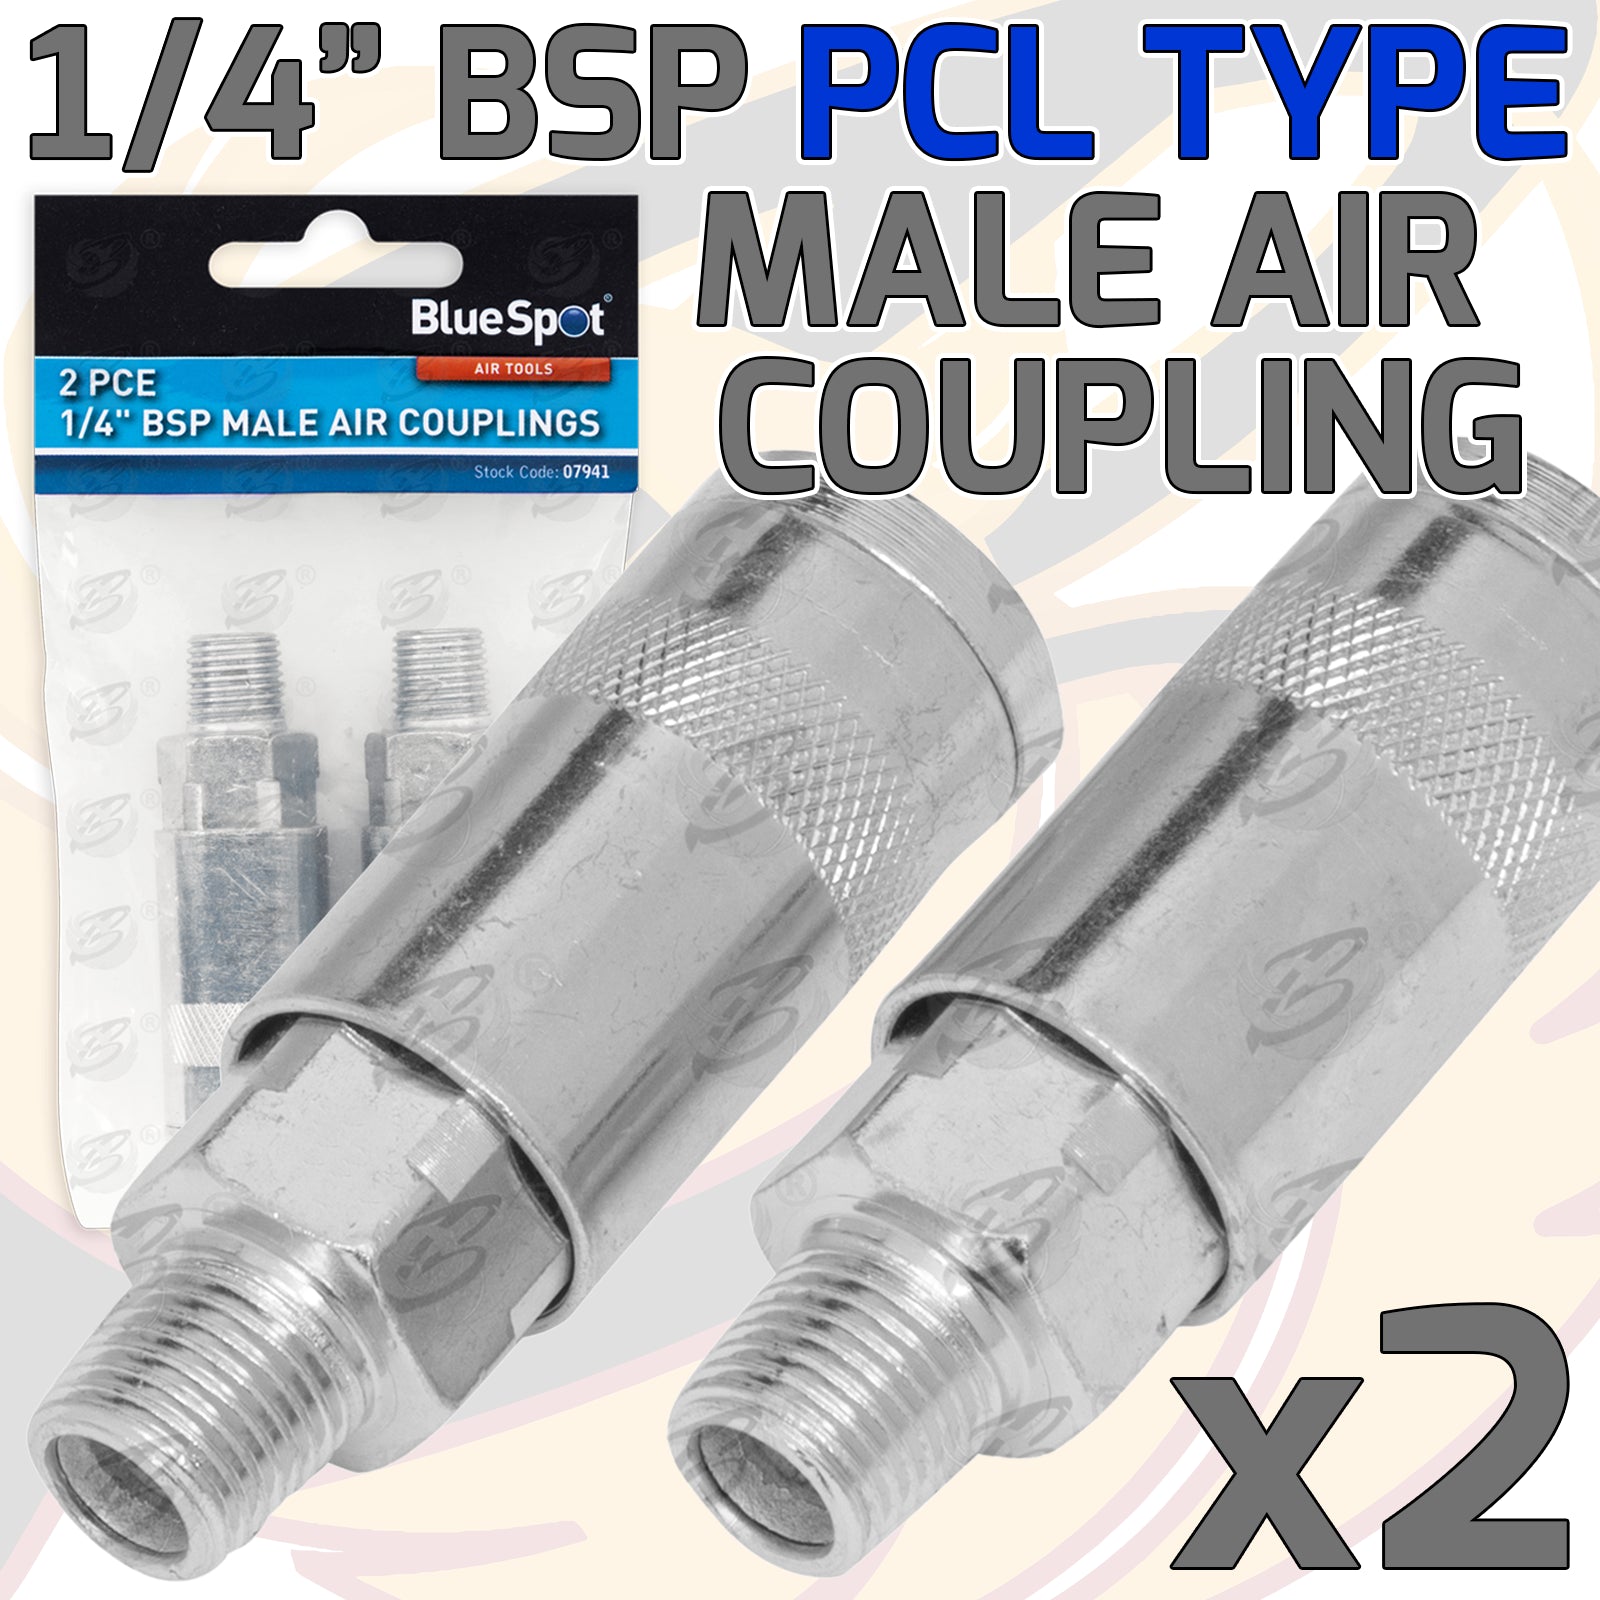 BLUESPOT 2PCS 1/4" BSP MALE ( PCL TYPE ) AIR COUPLINGS